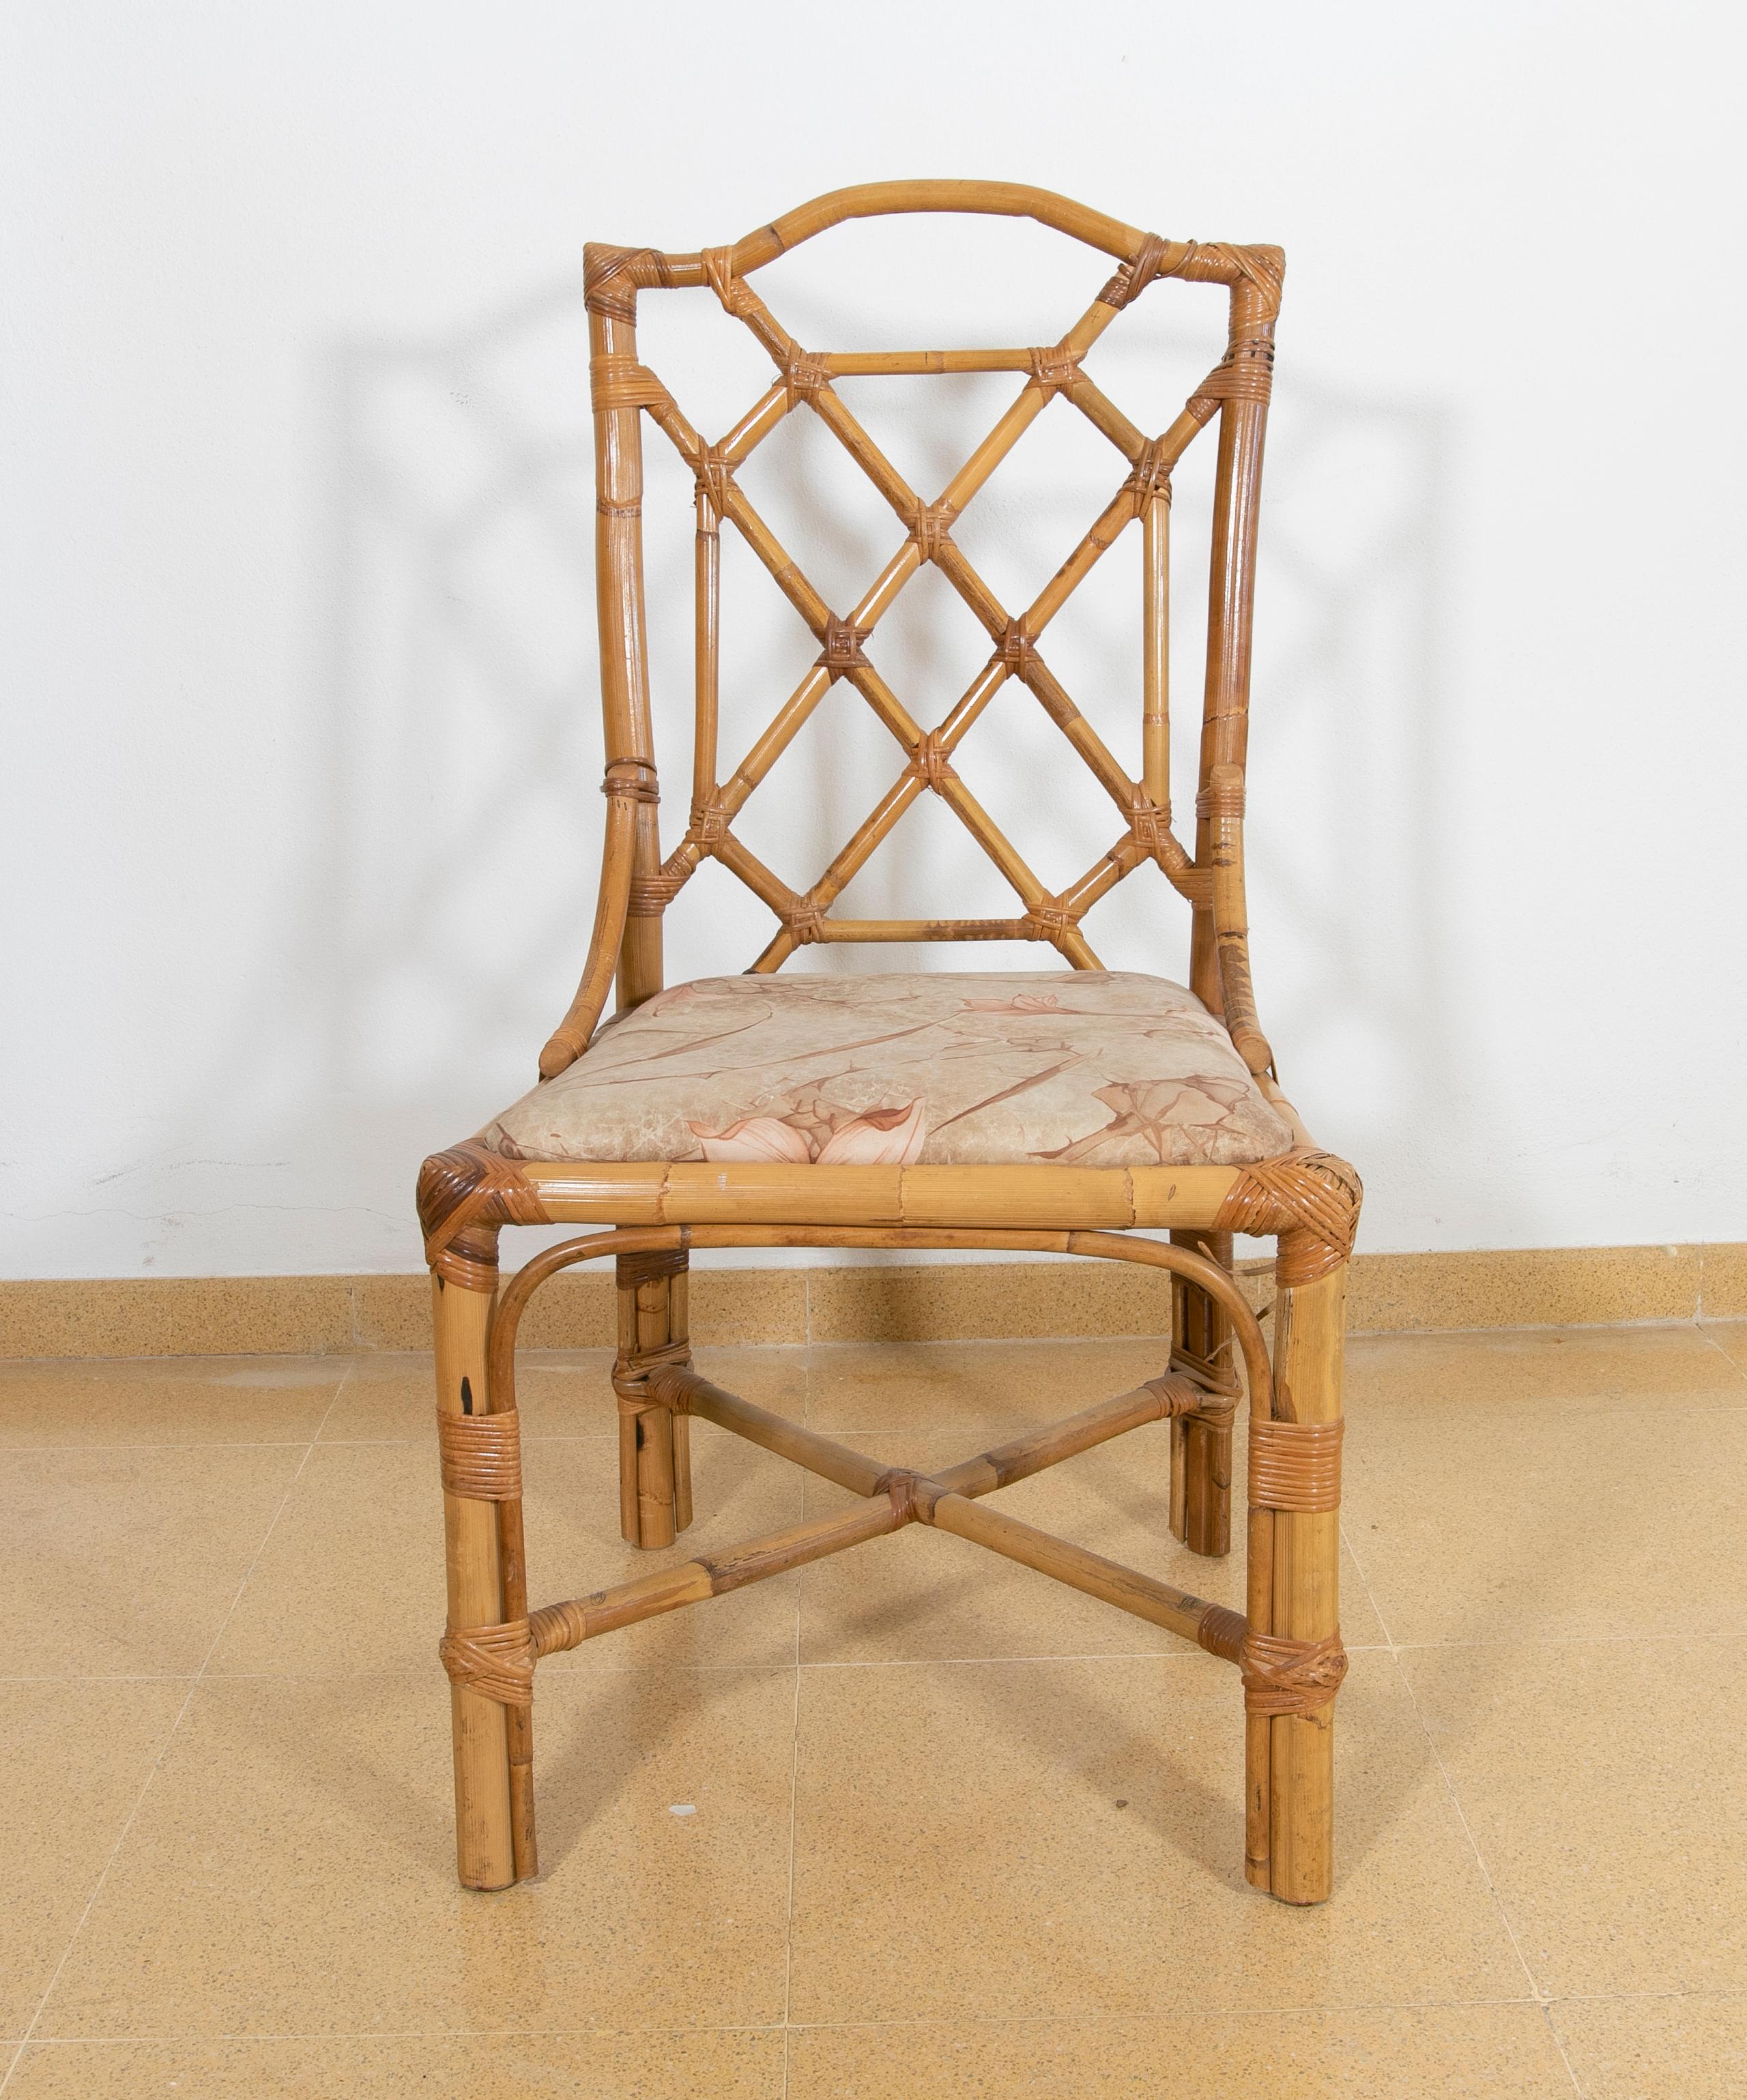 1980s English bamboo chair.